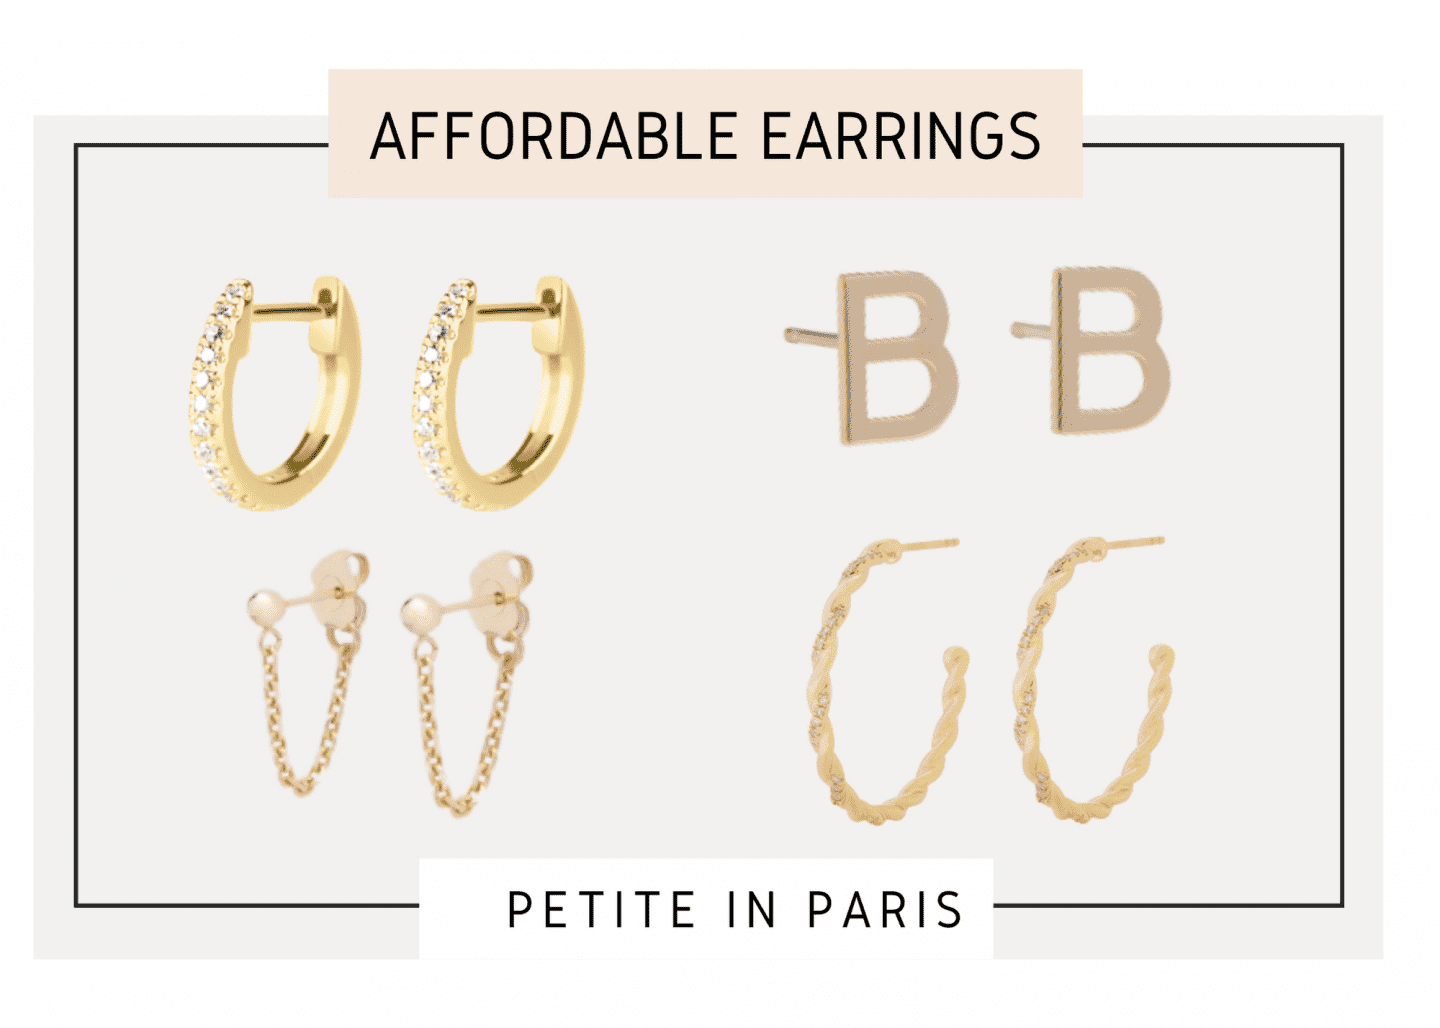 Affordable fine Jewelry Earrings